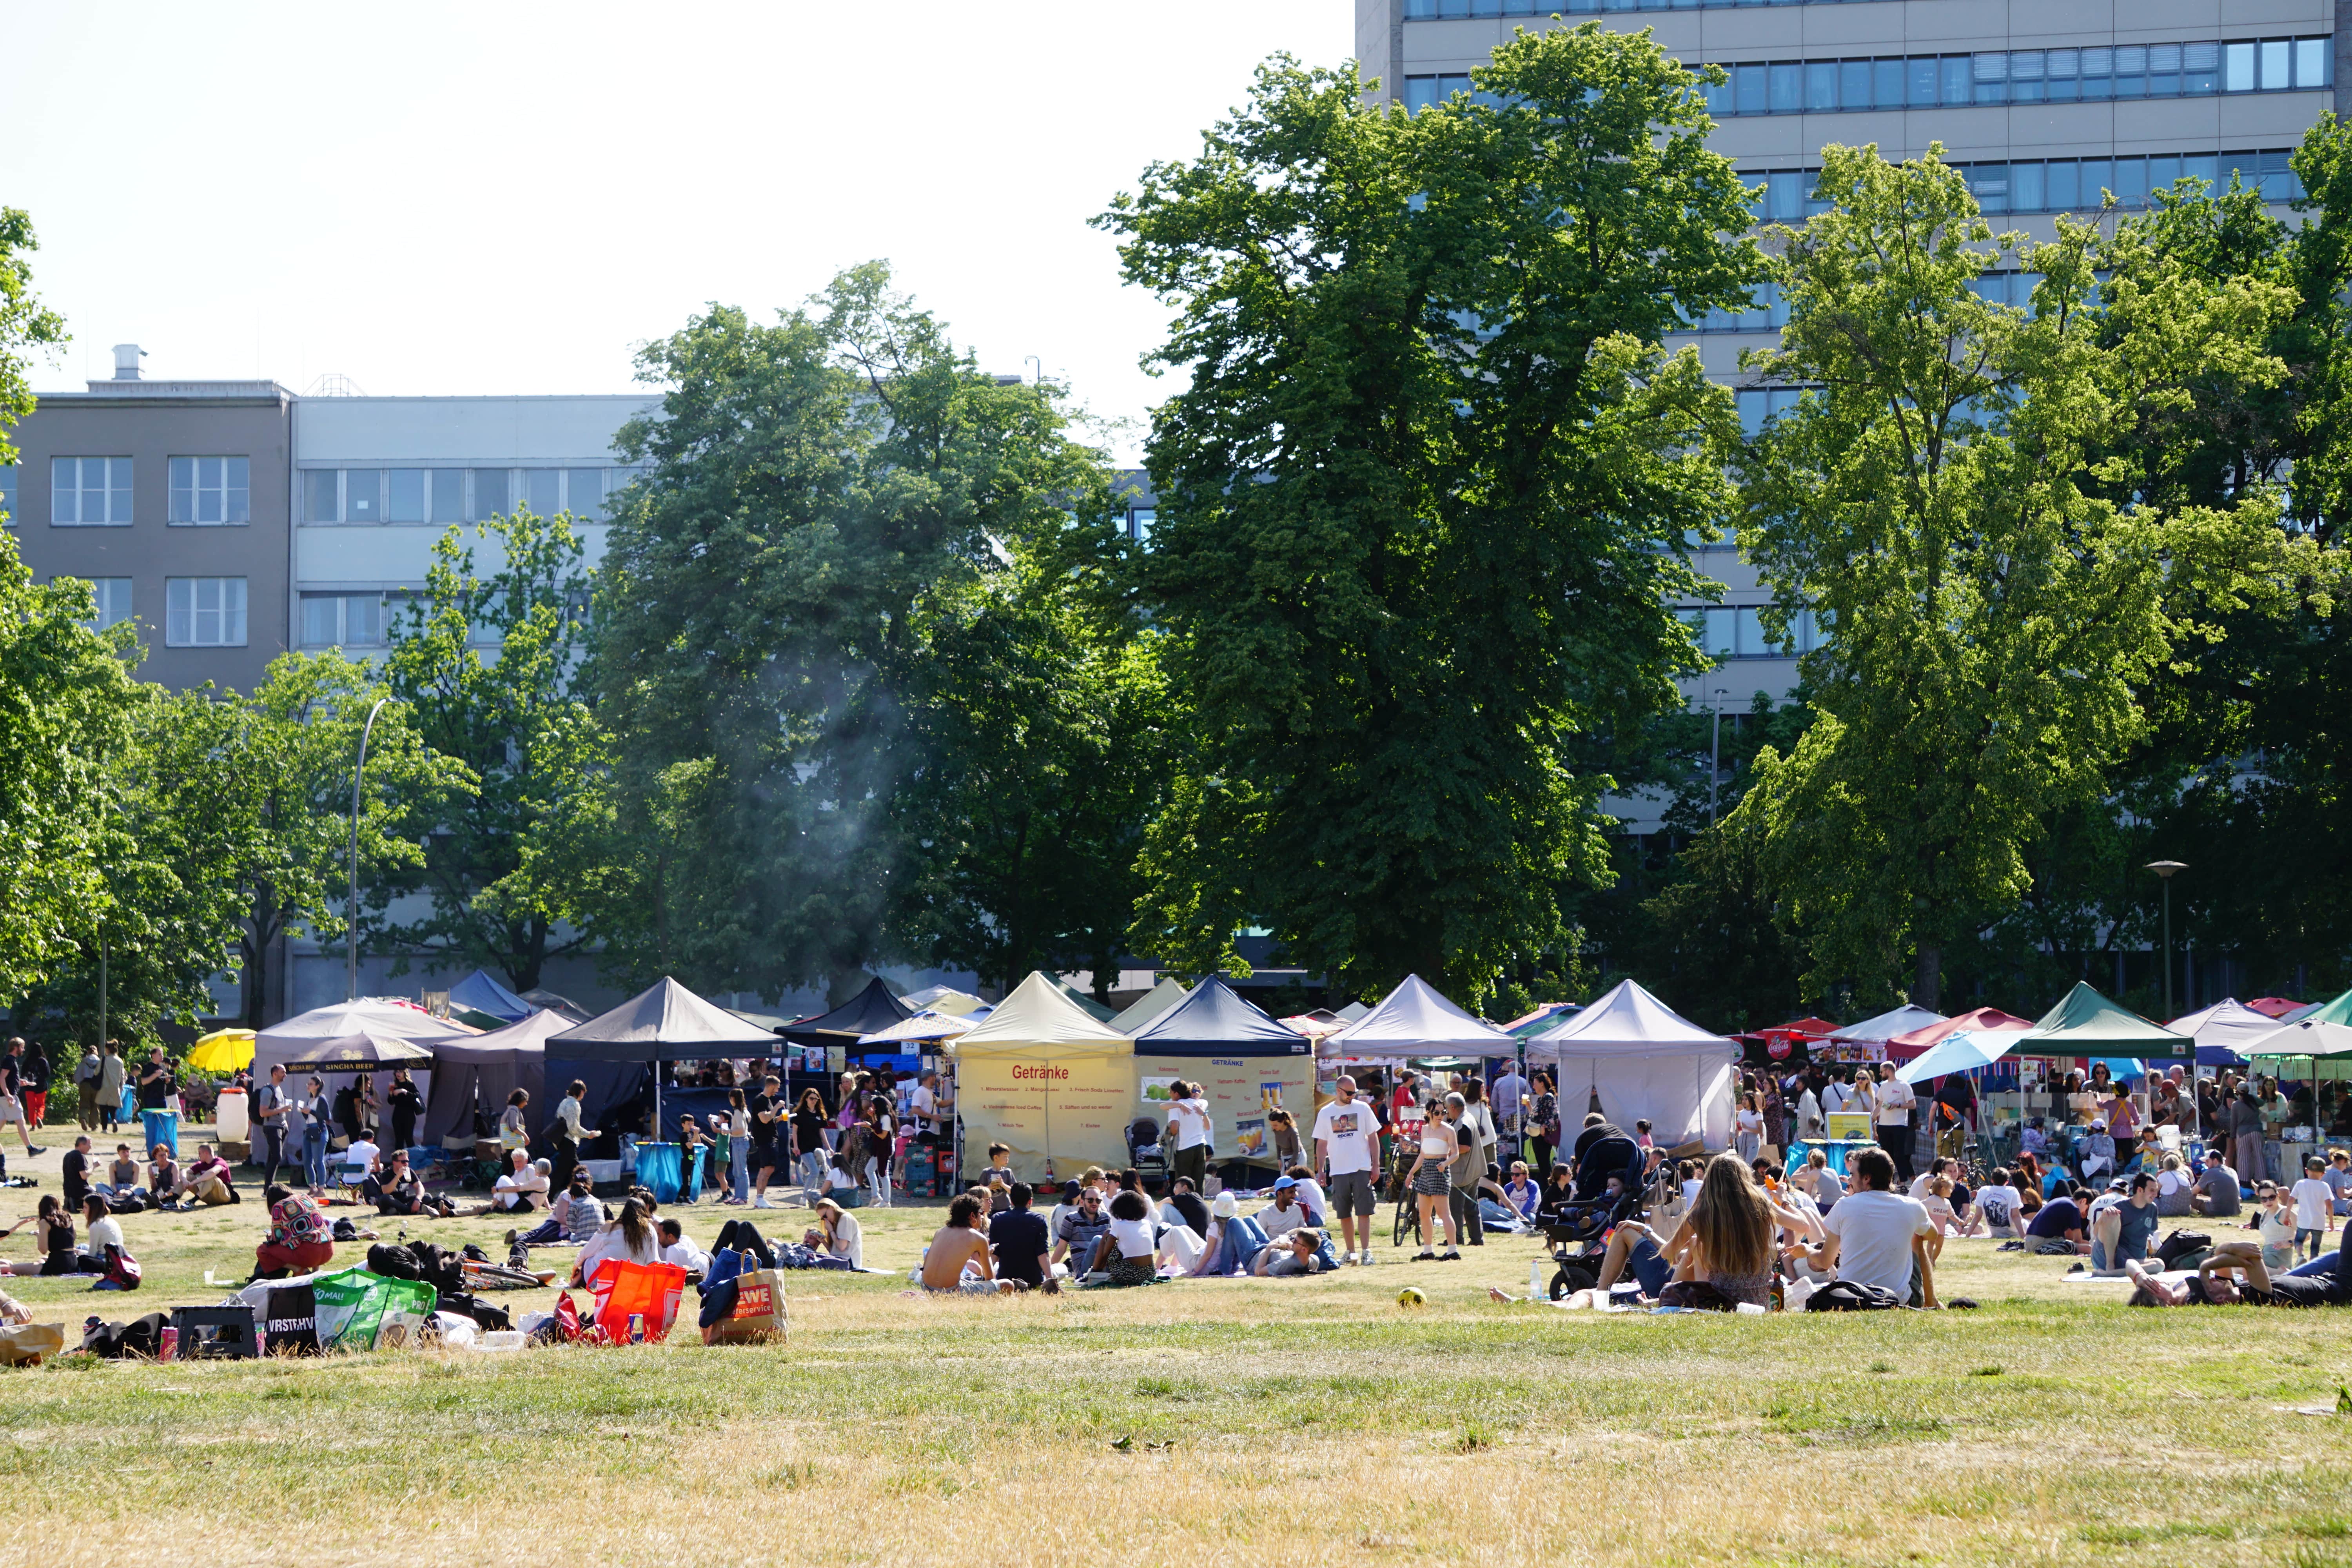 Thai park is a Thai food festival that happens in Berlin every weekend